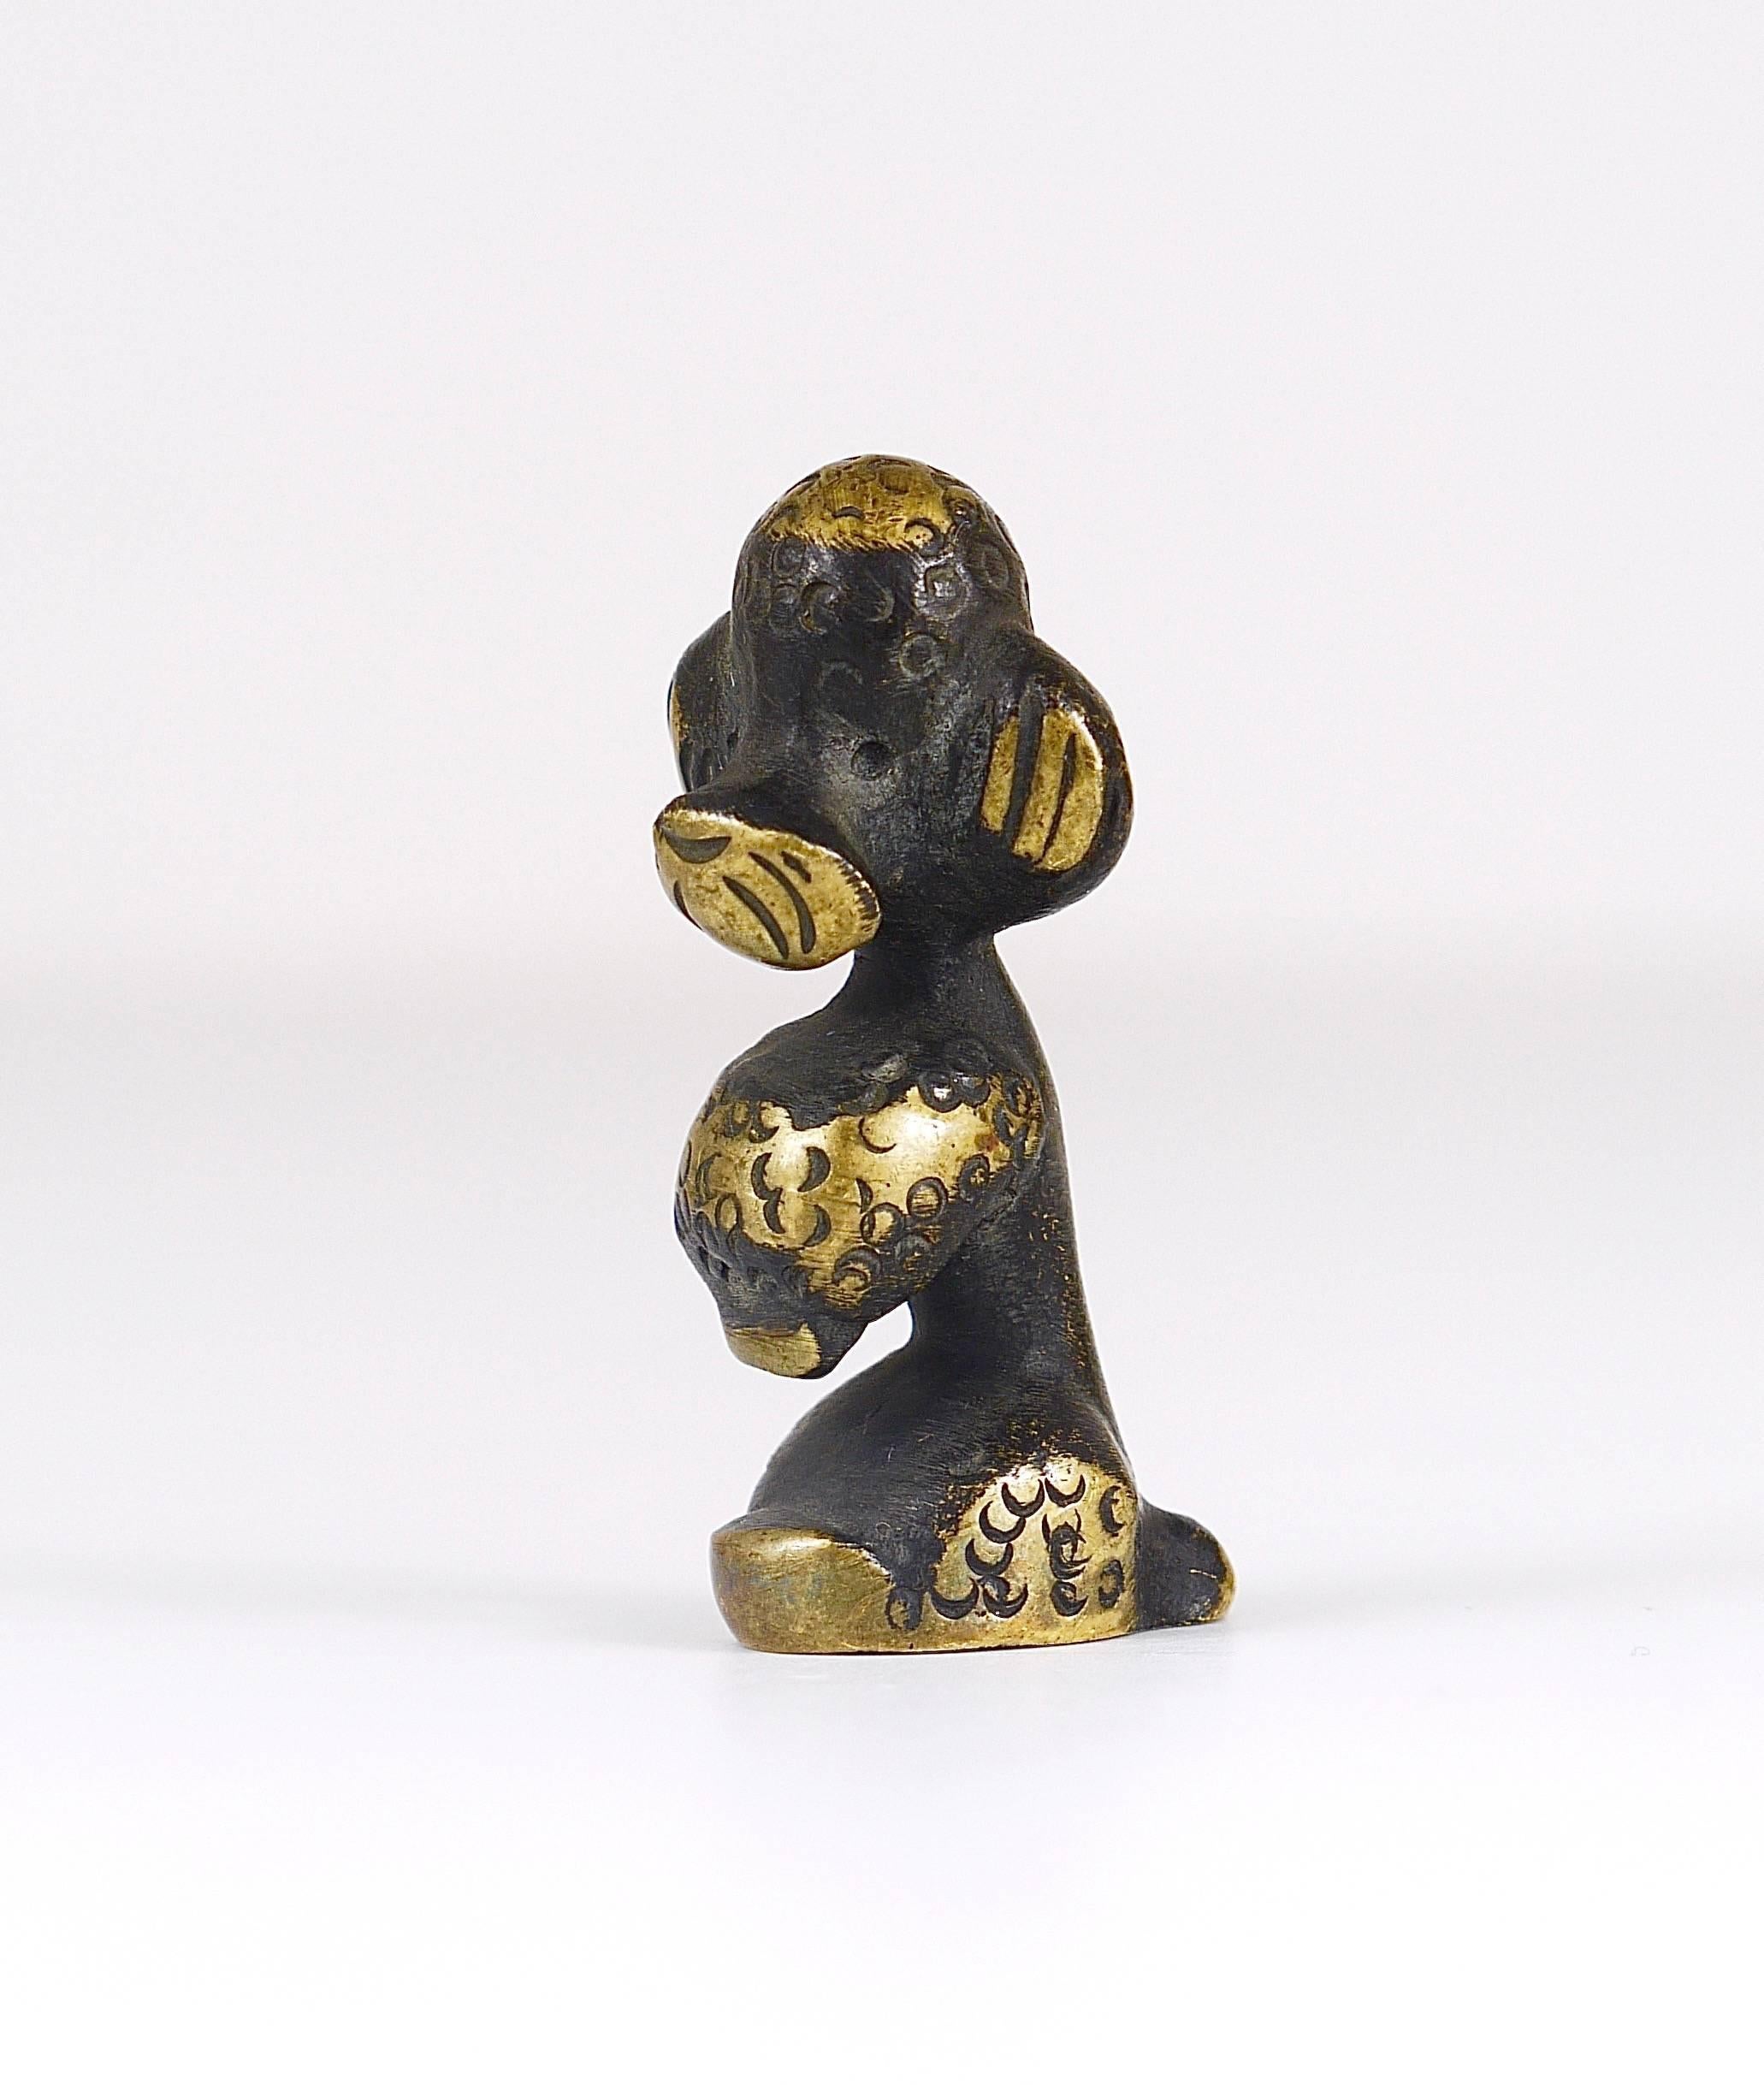 Walter Bosse Brass Poodle Figurine, Lucky Charm, Herta Baller, Austria, 1950s For Sale 1